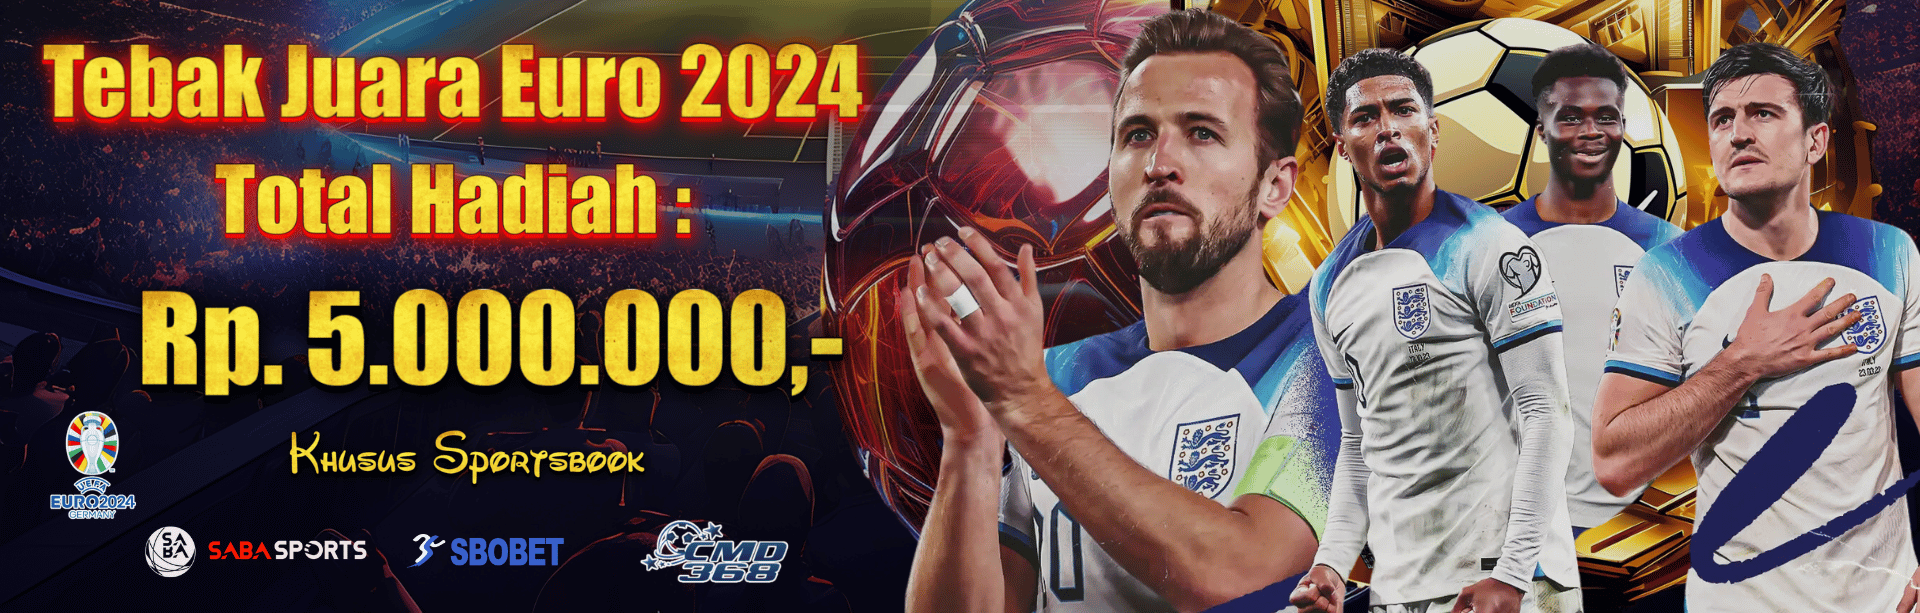 Tebak Juara Euro 2024